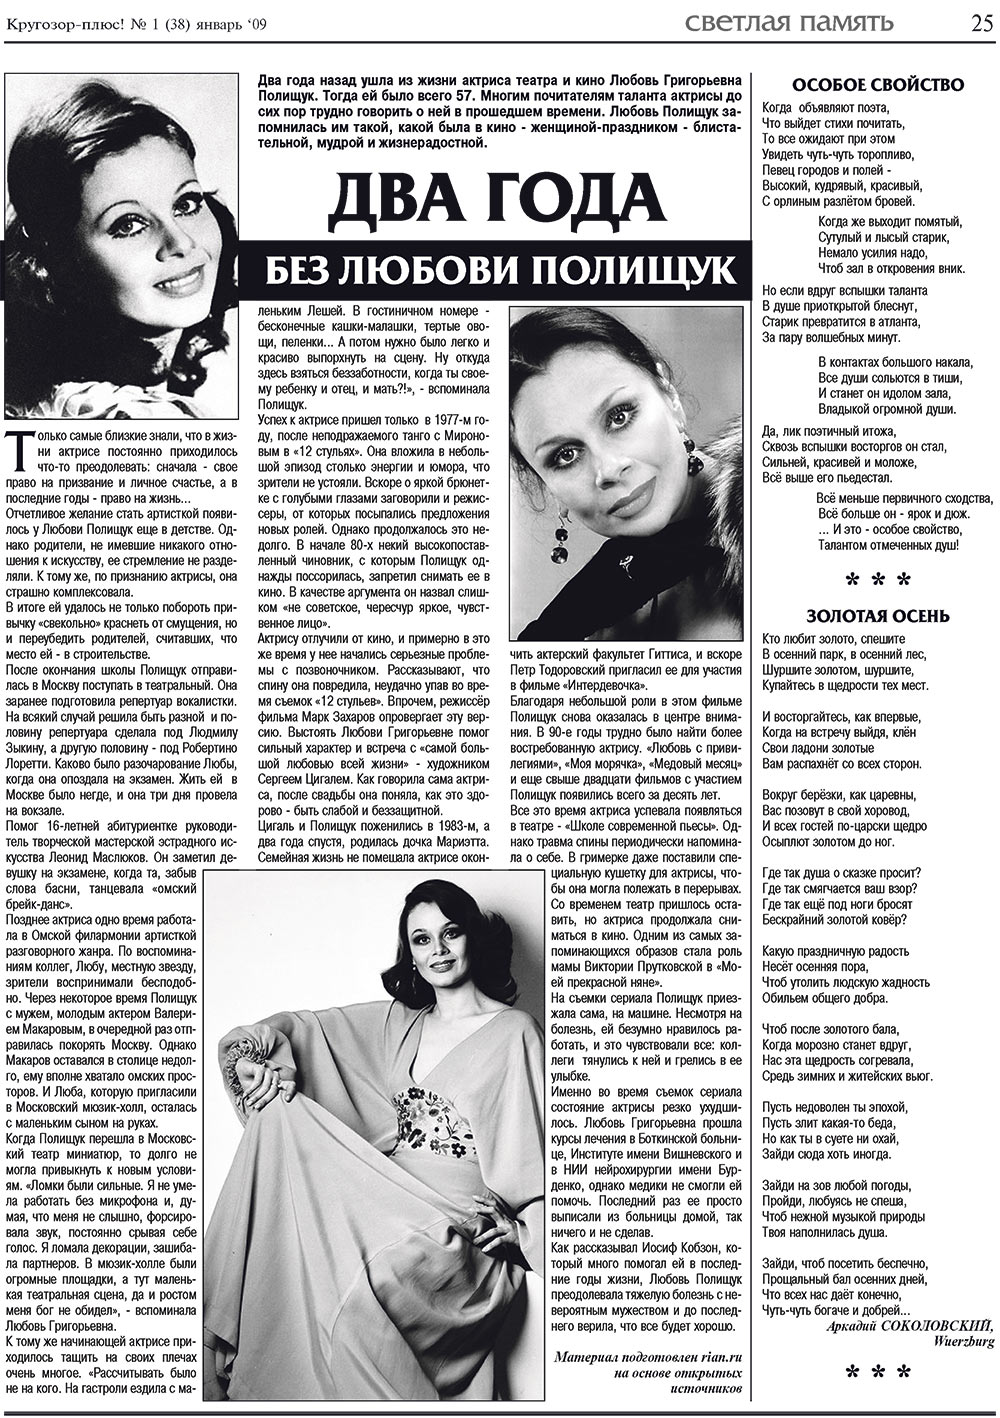 Кругозор плюс! (газета). 2009 год, номер 1, стр. 25